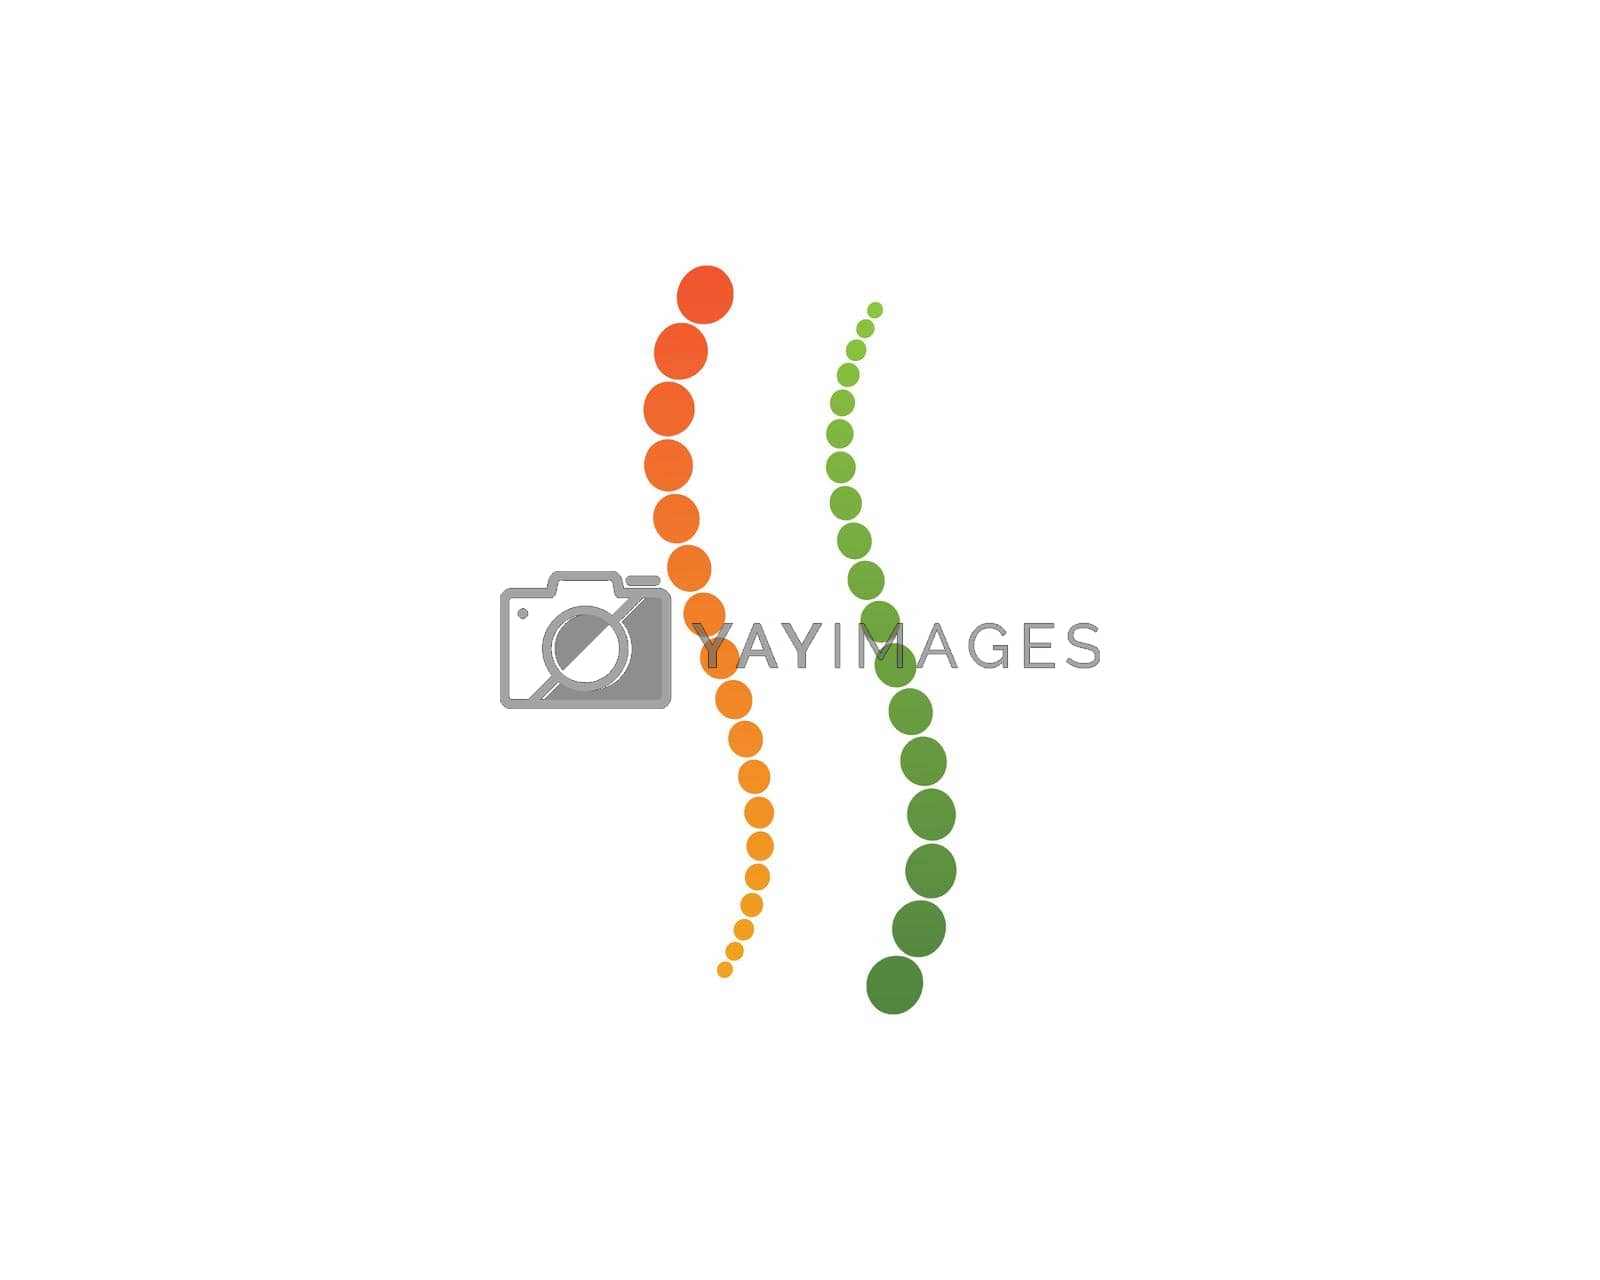 Royalty free image of Spine diagnostics symbol logo templat by awk